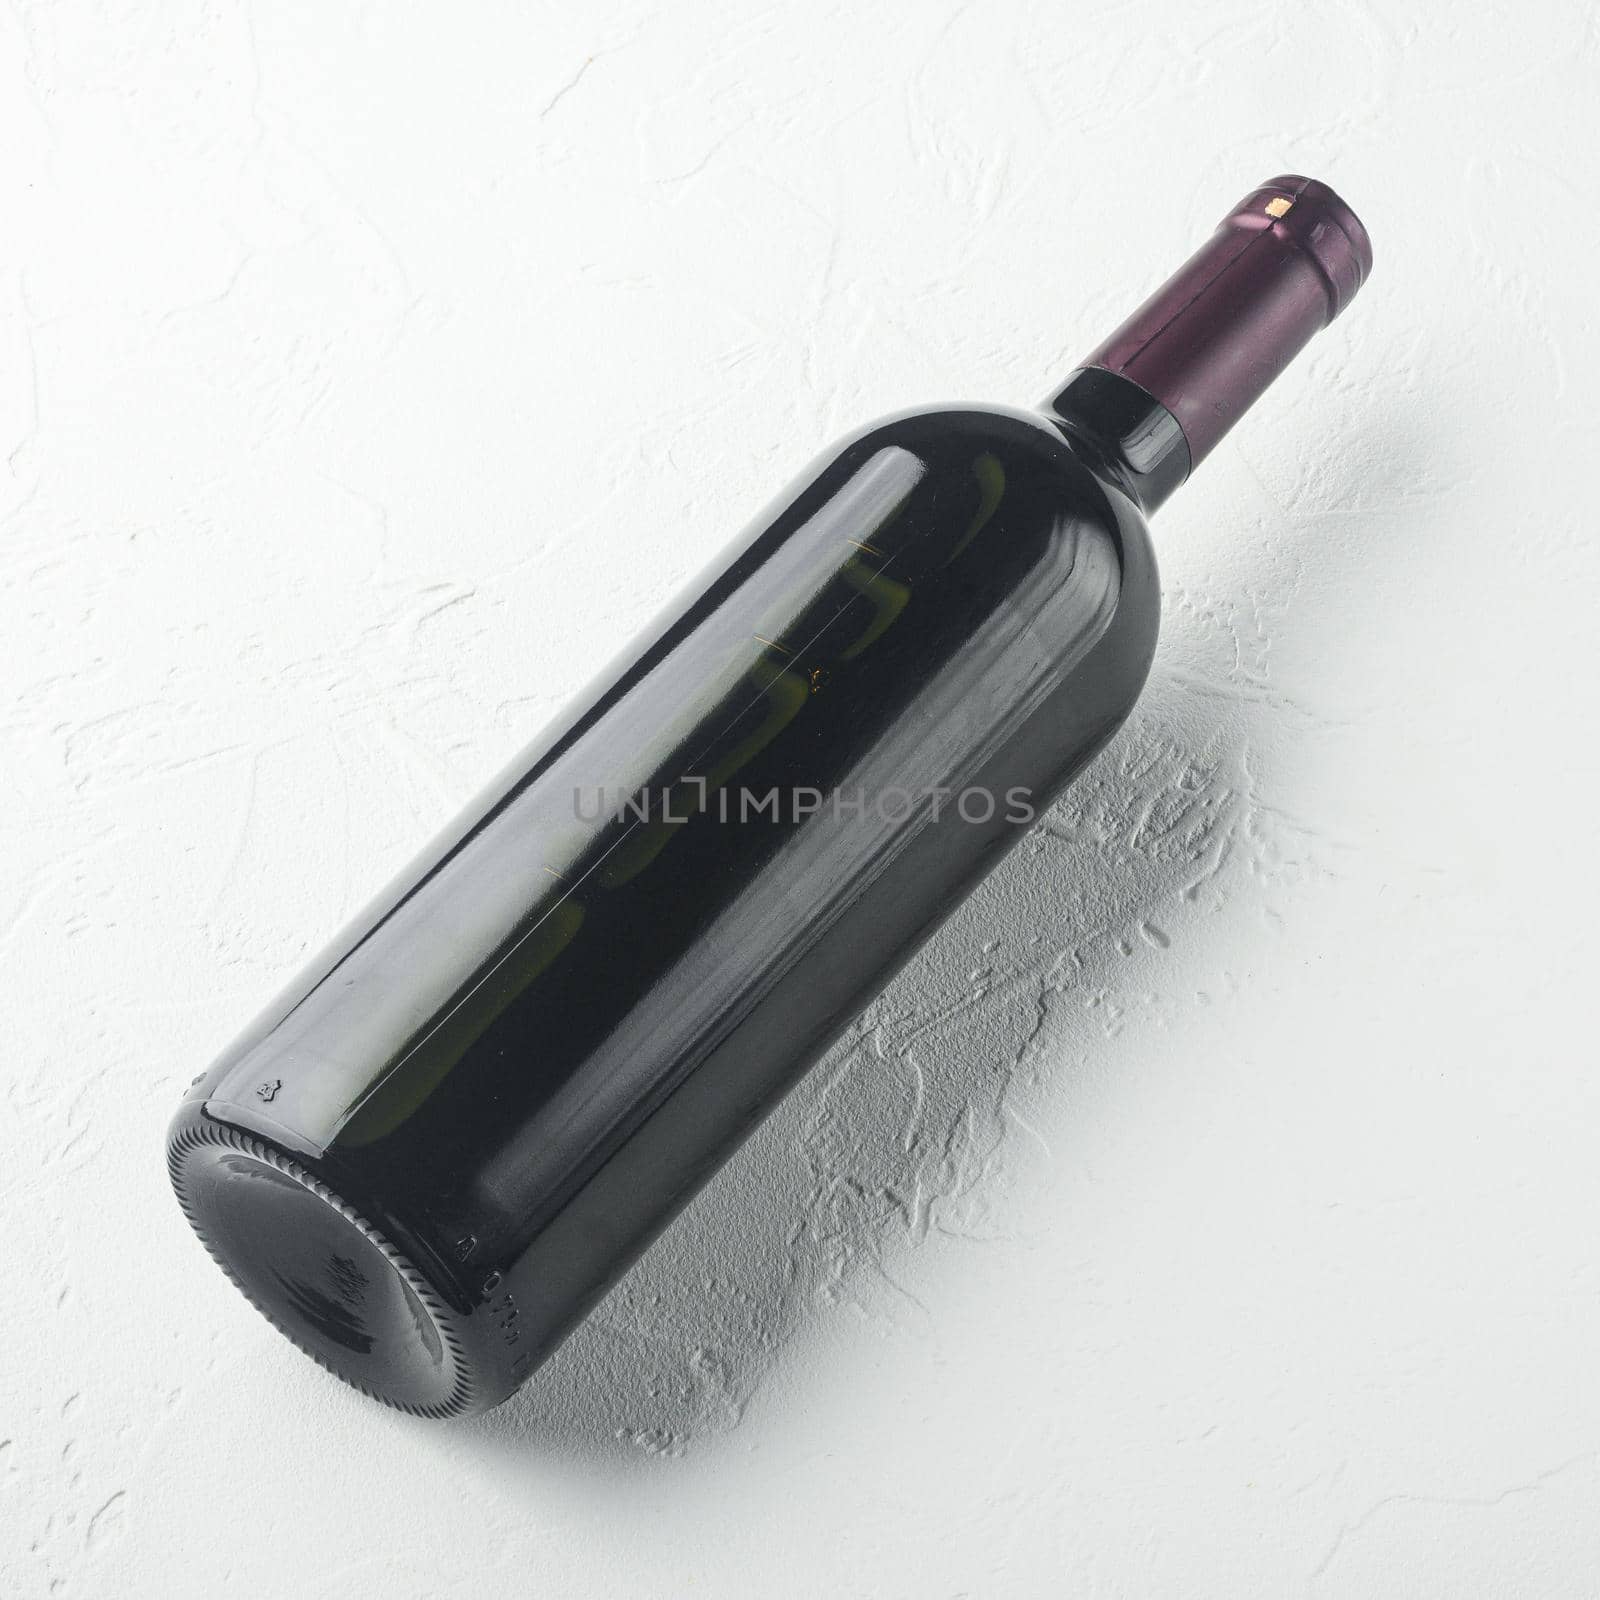 Wine bottle, square format , on white stone background by Ilianesolenyi